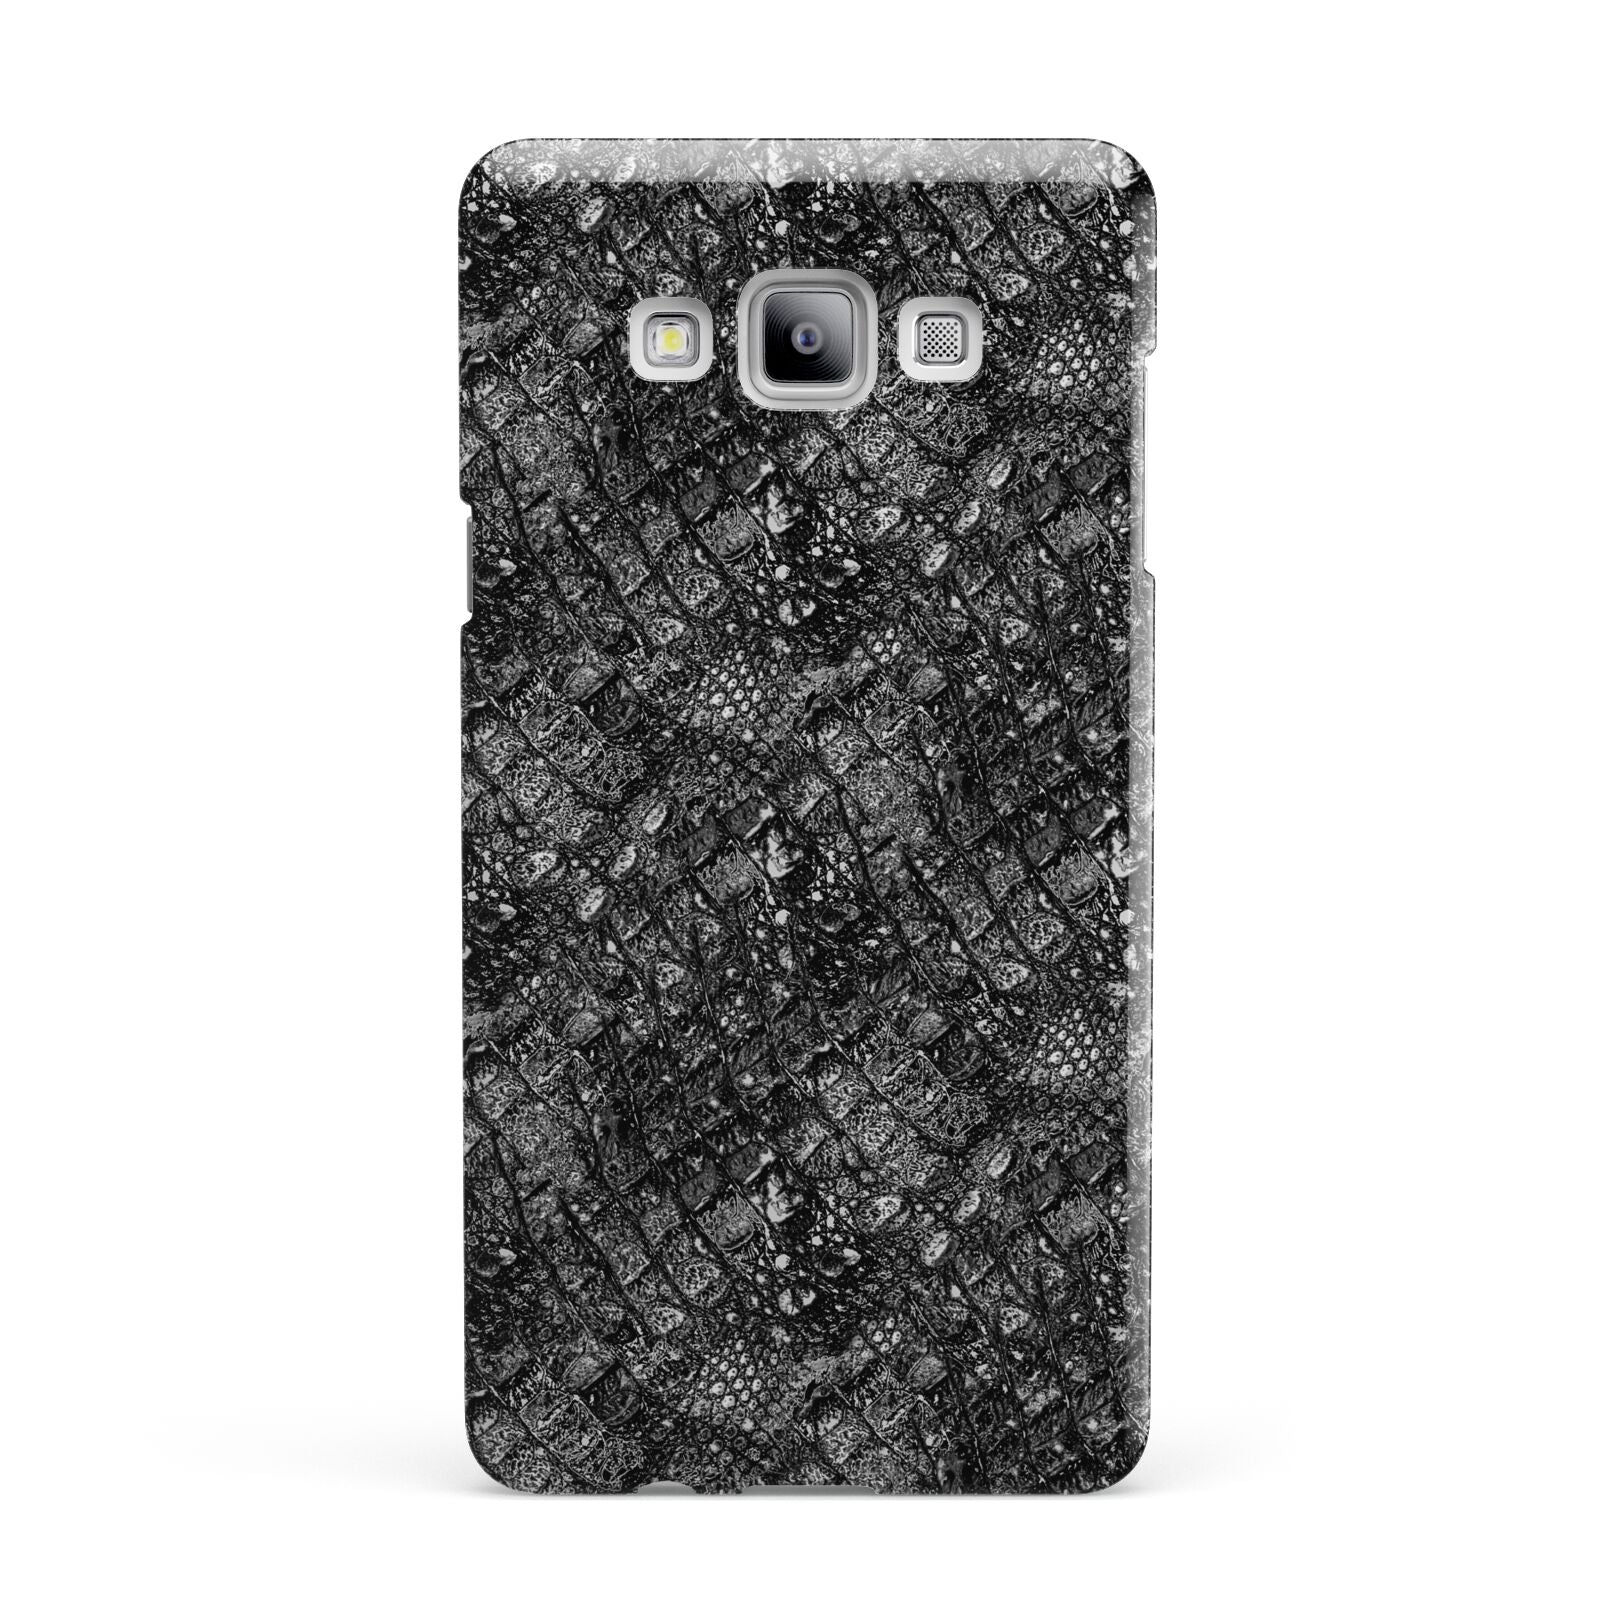 Snakeskin Design Samsung Galaxy A7 2015 Case